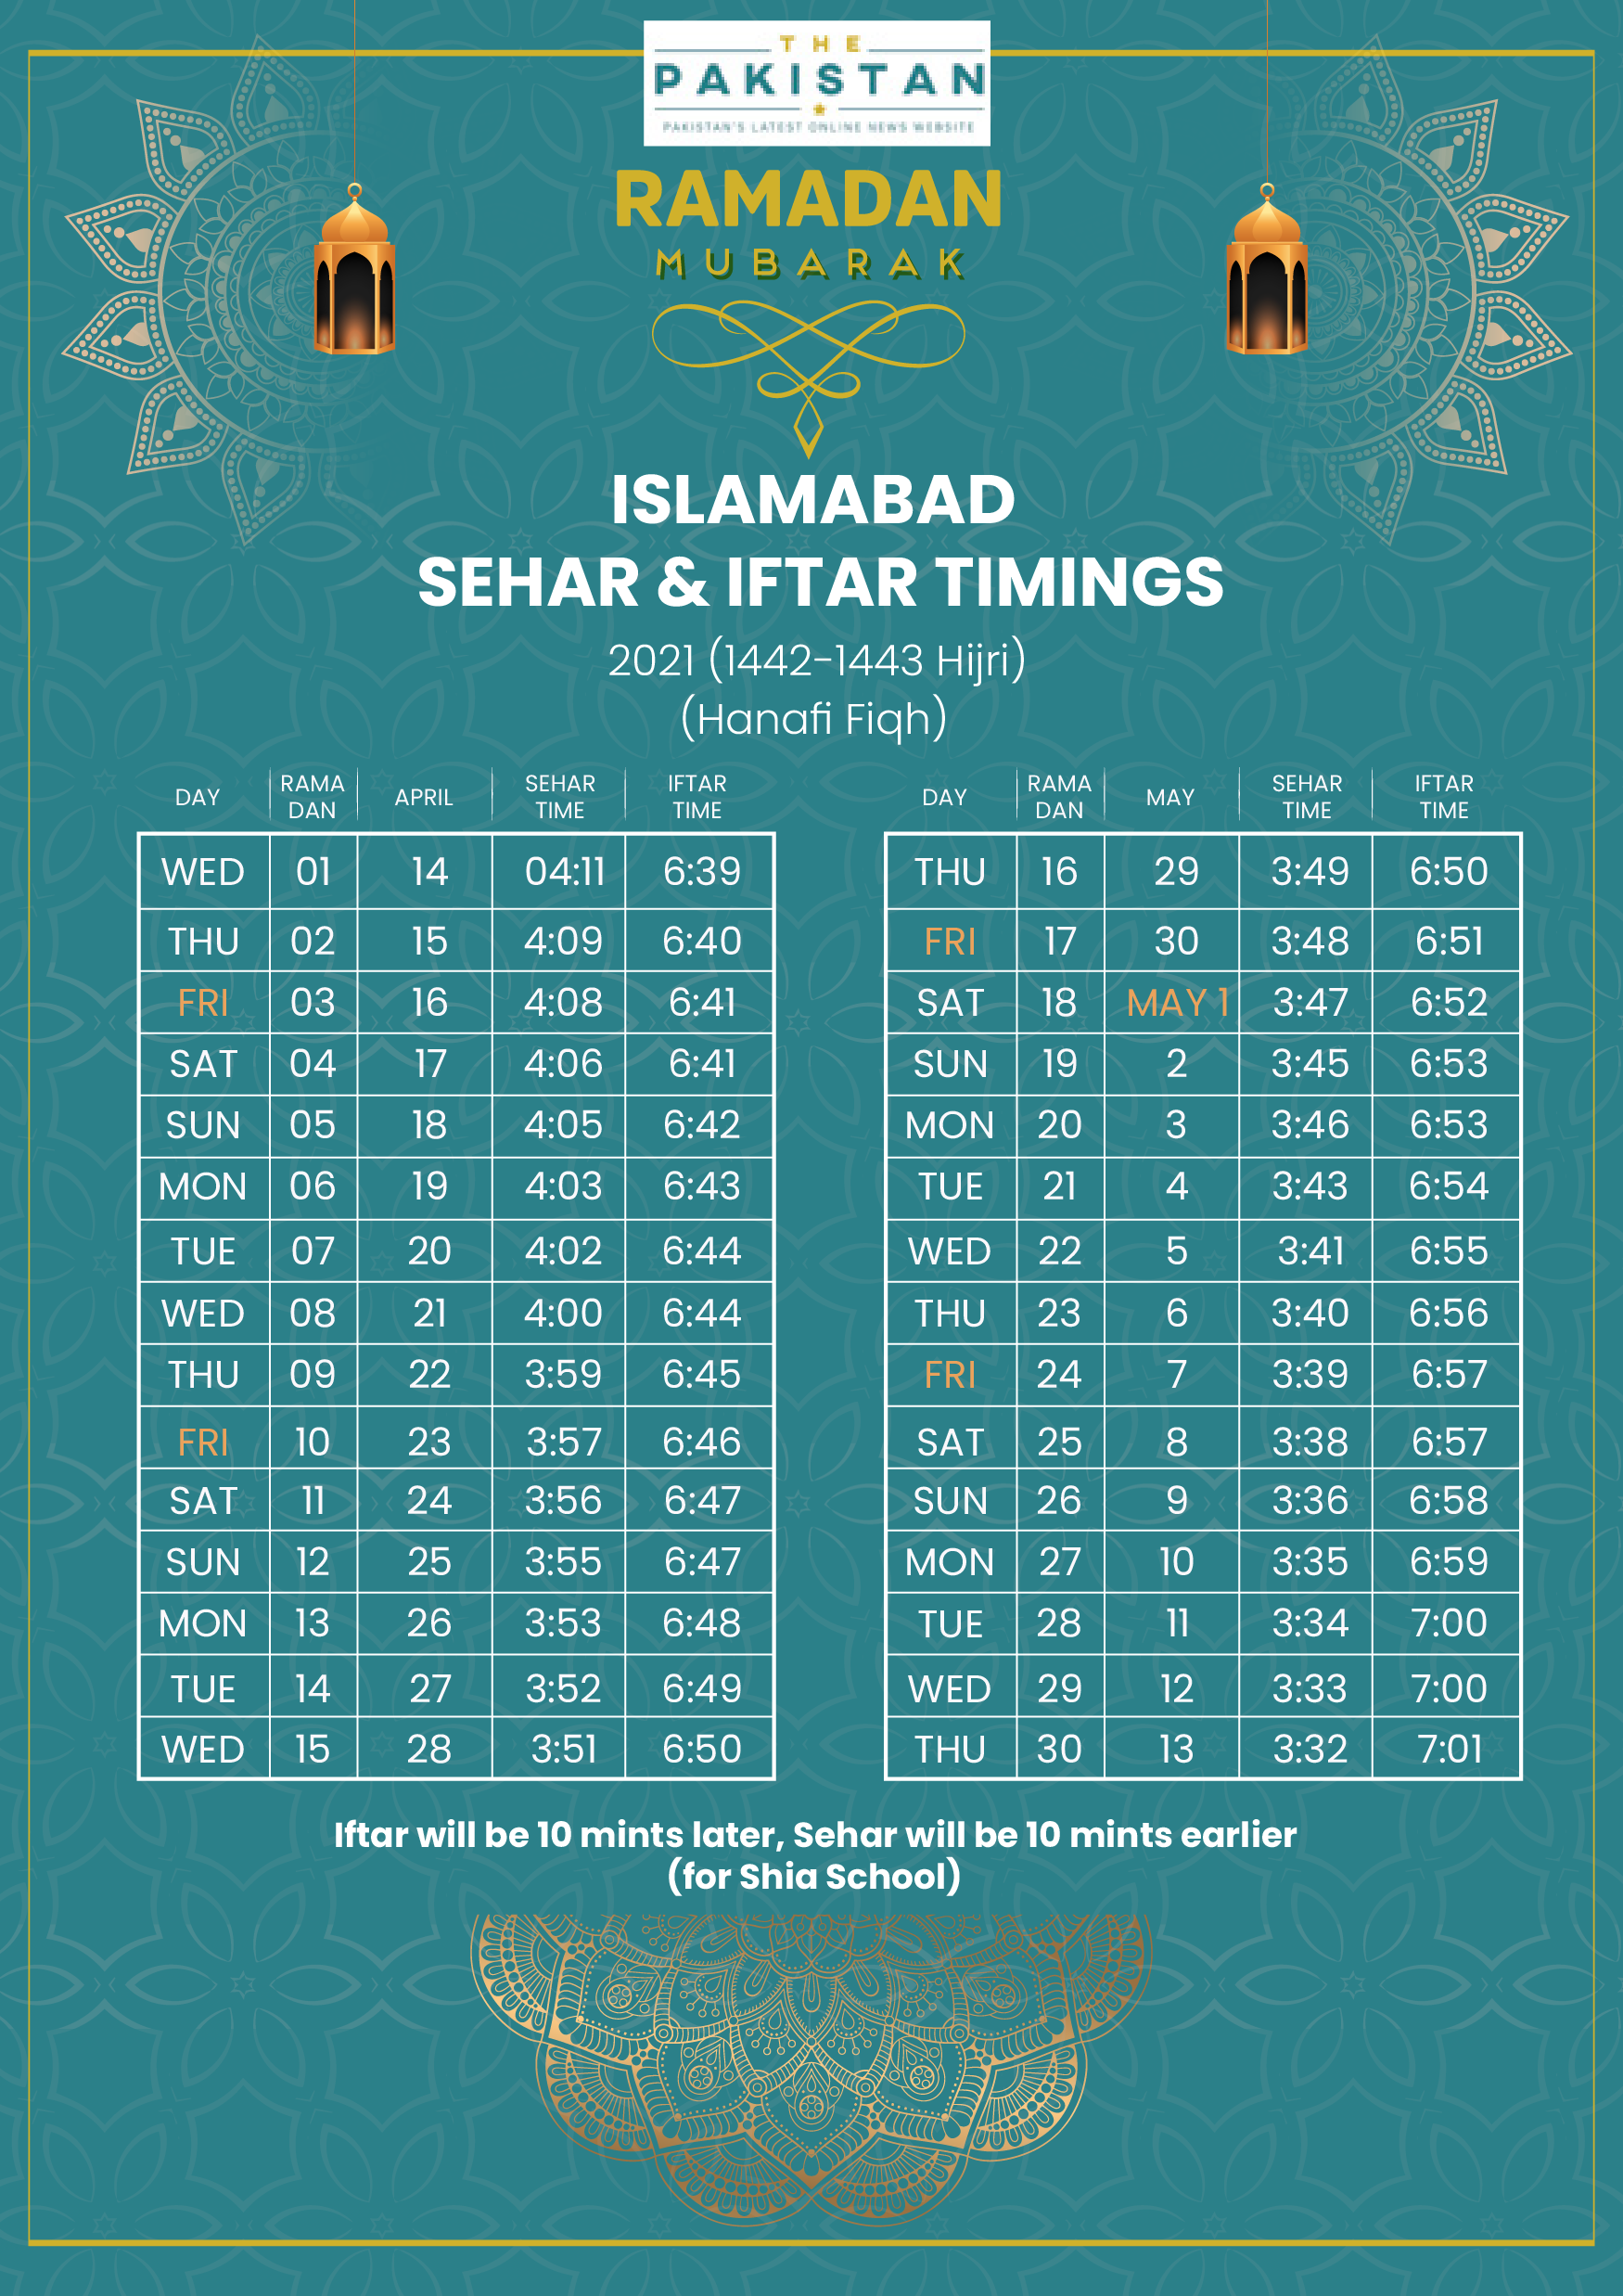 SEHRI & IFTAR TIME - ISLAMABAD